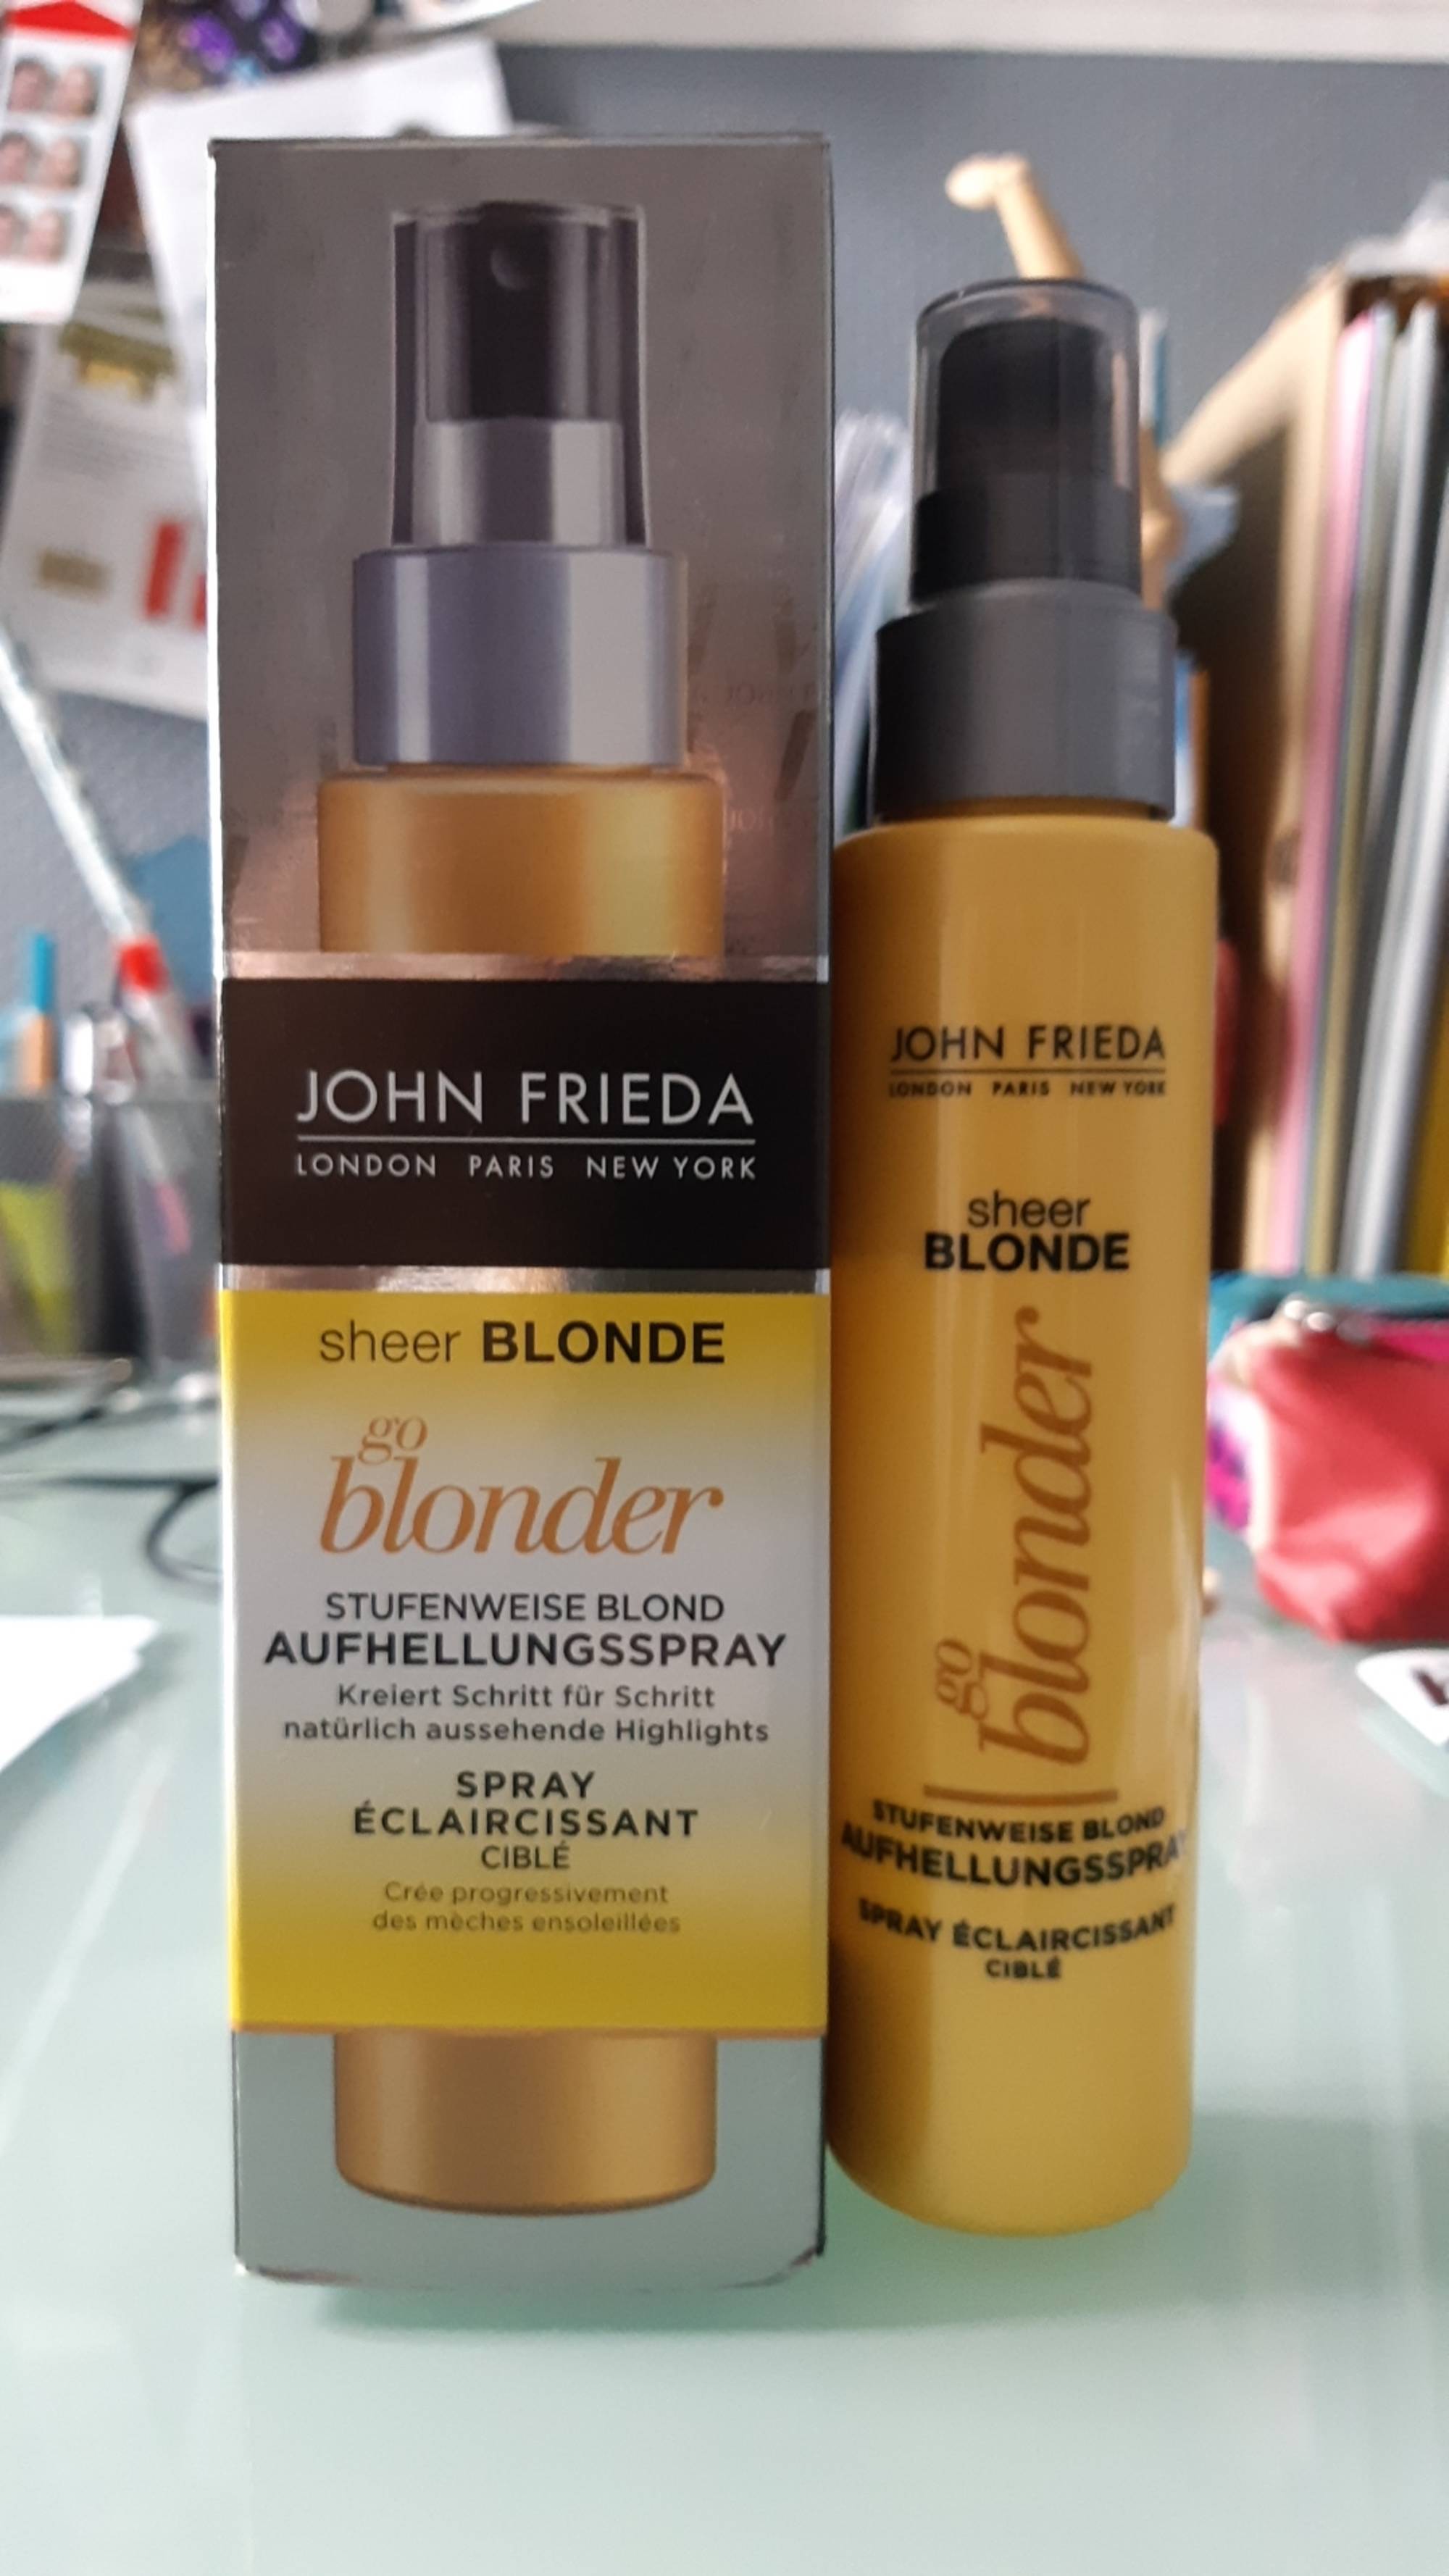 JOHN FRIEDA - Sheer blonde go blonder - Spray éclaircissant ciblé